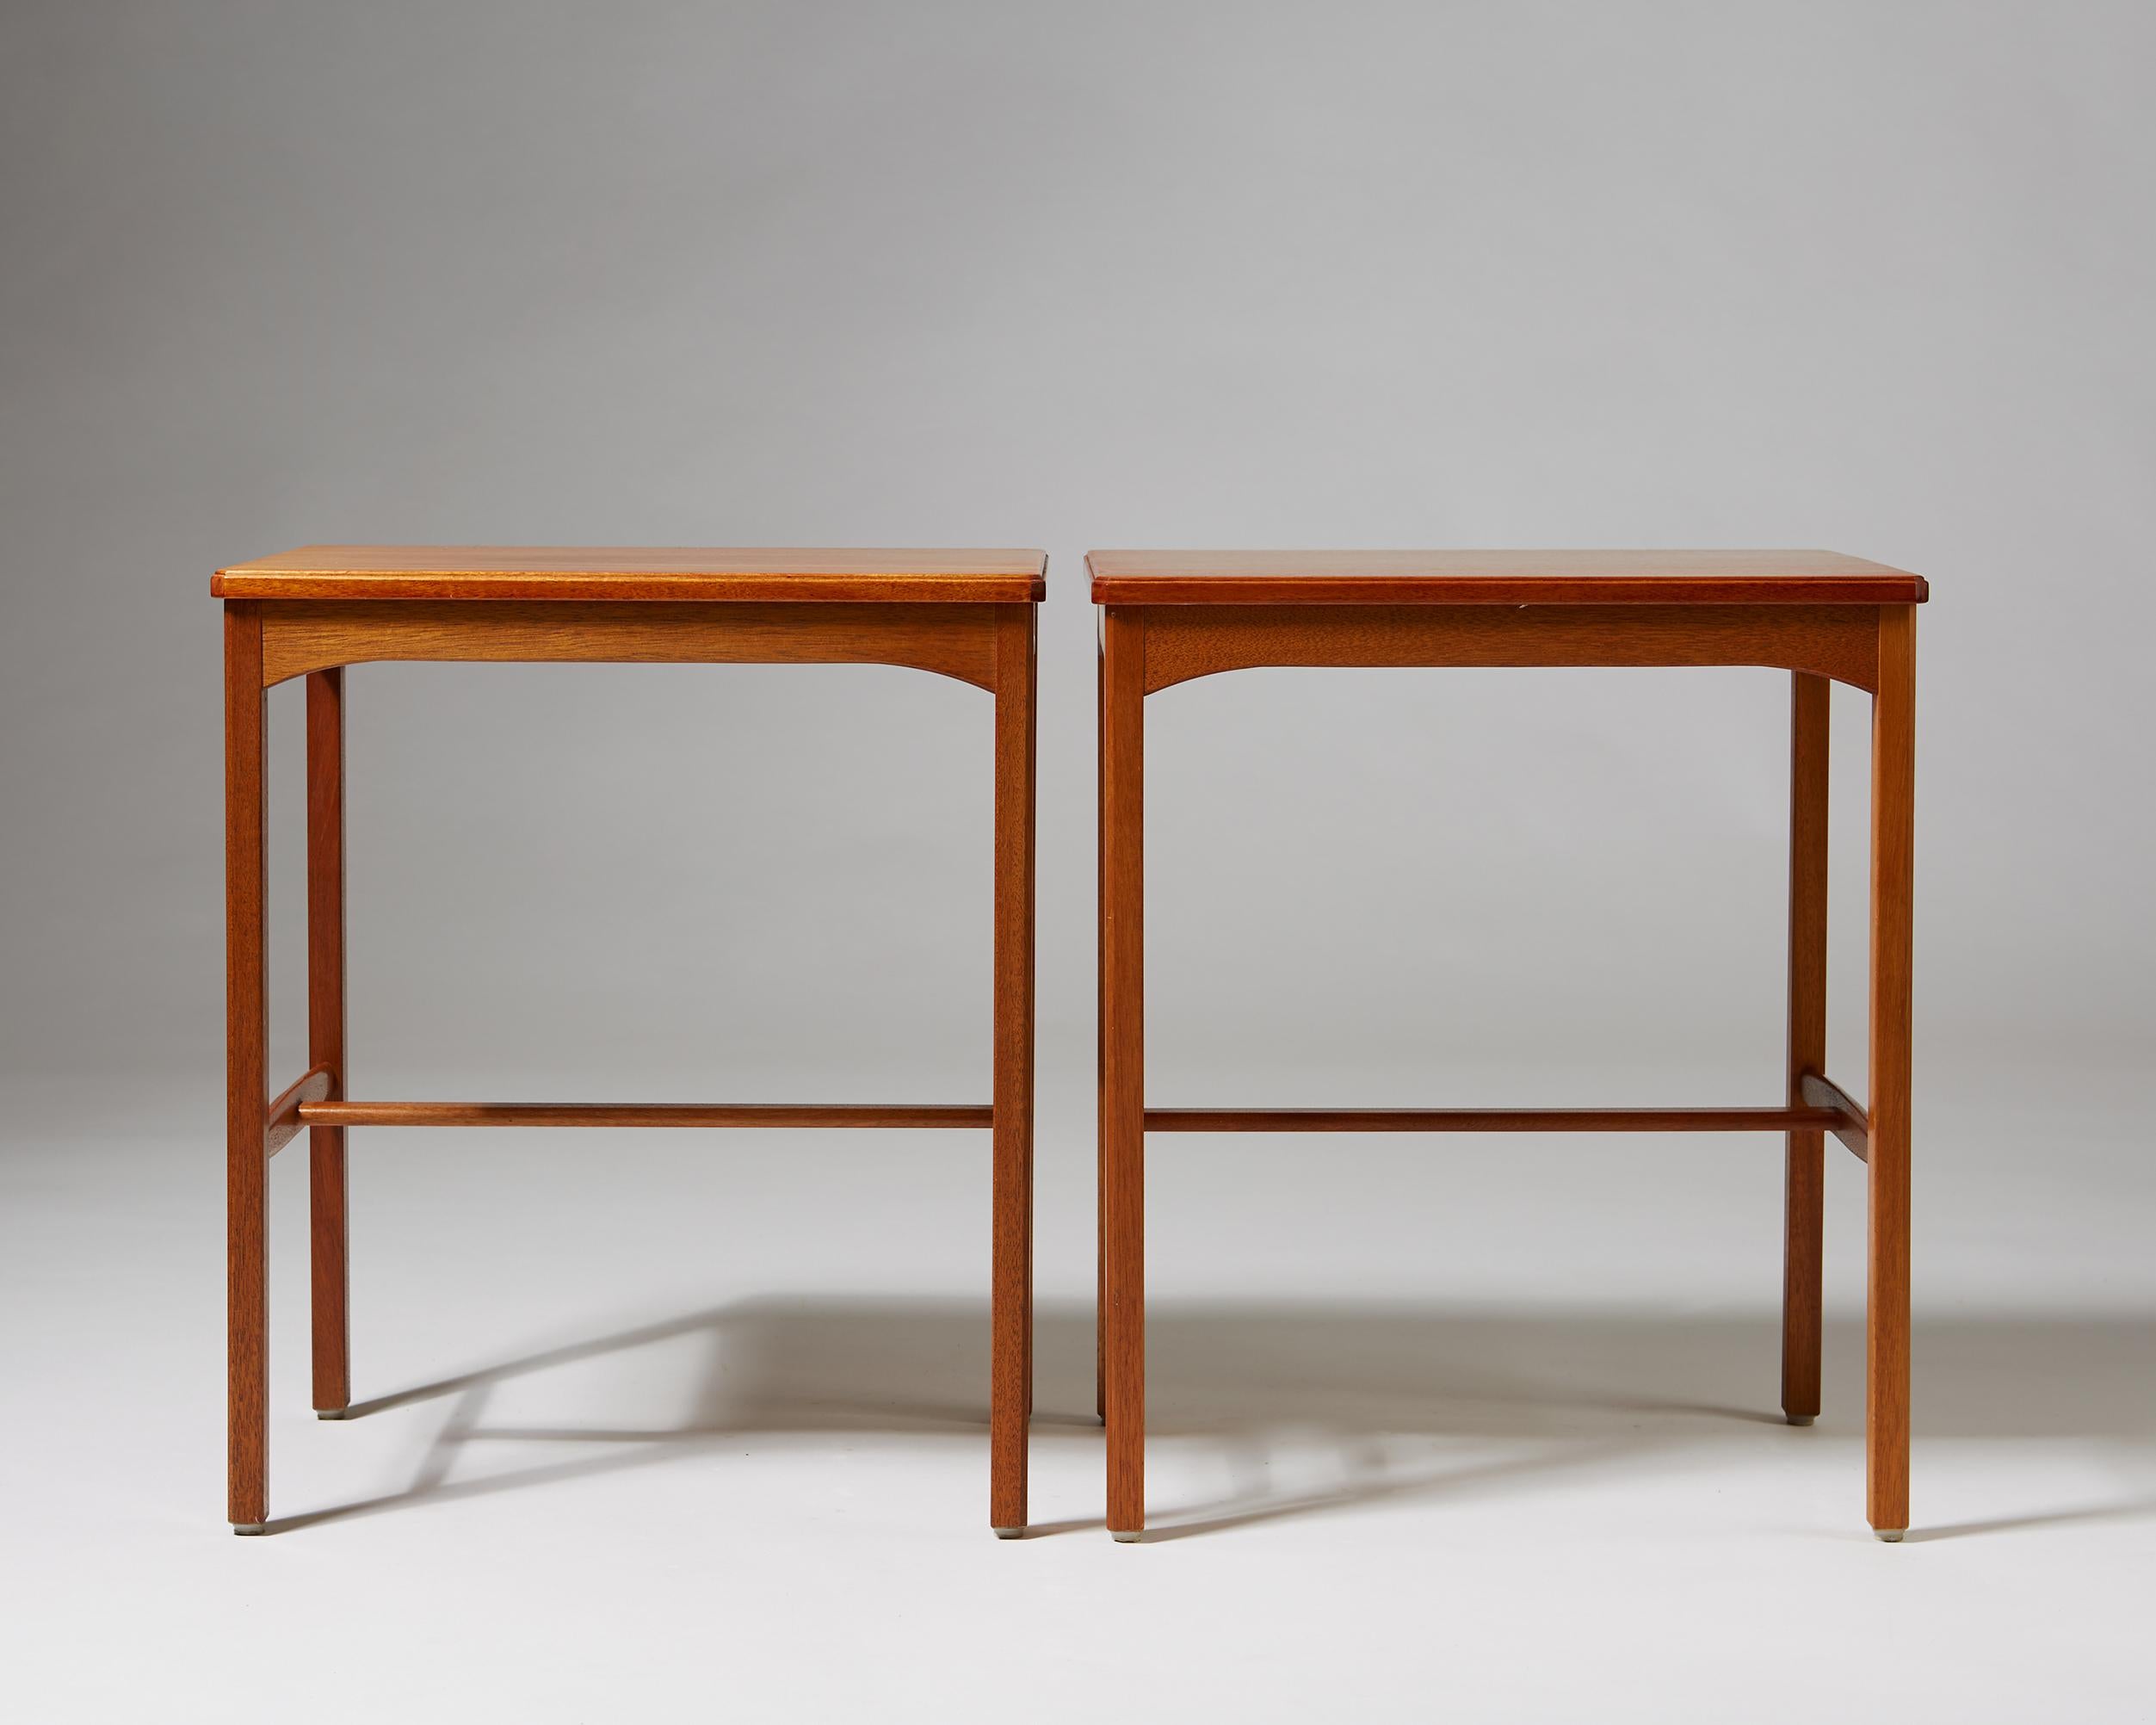 Swedish Pair of Side Tables Designed by Carl Malmsten for Carl Löfving & Söner, Sweden